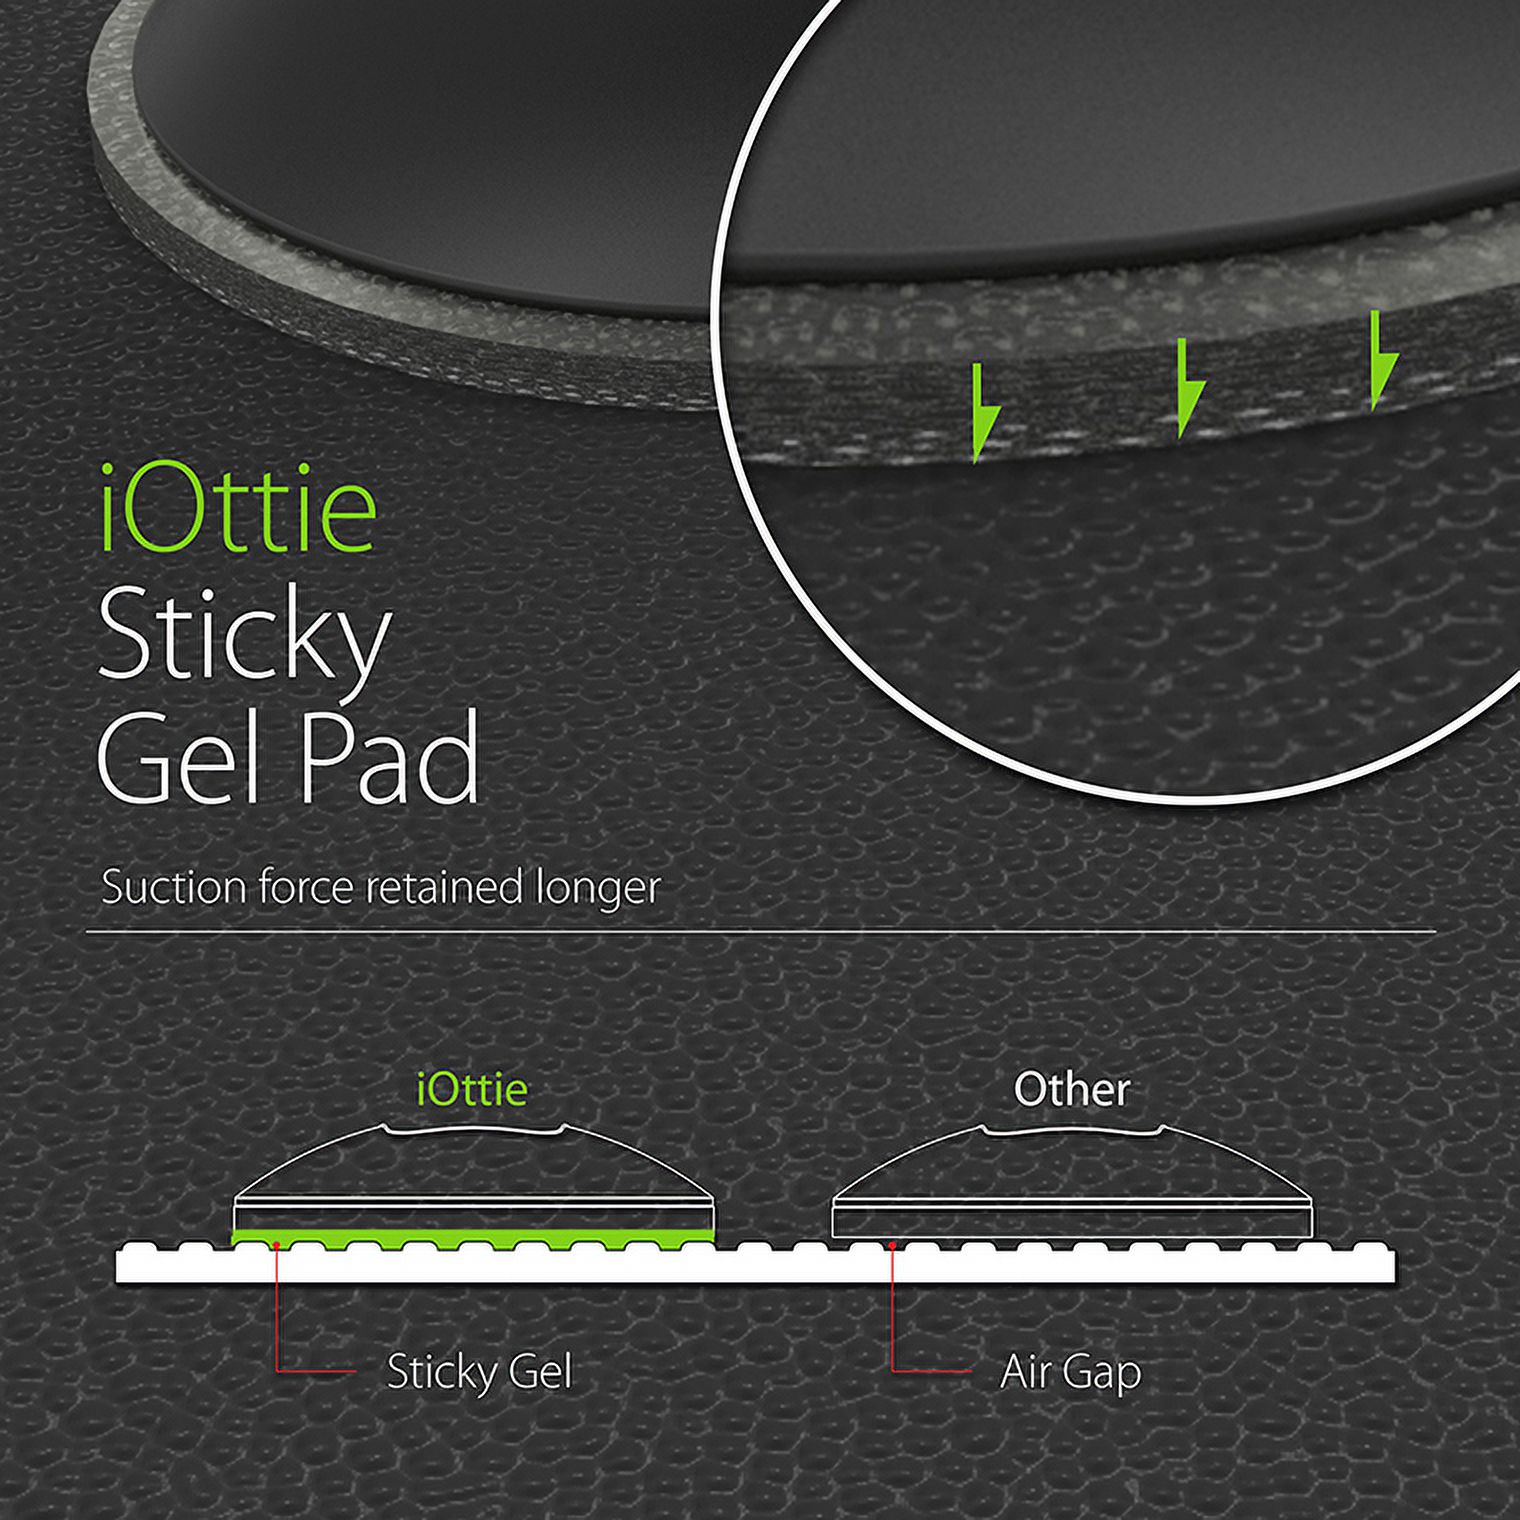 iOttie Easy View Universal Car Mount Holder for iPhone 5/5C/5S/6/6S/SE, Galaxy S5/S6/S7, S6/S7Edge - image 5 of 6